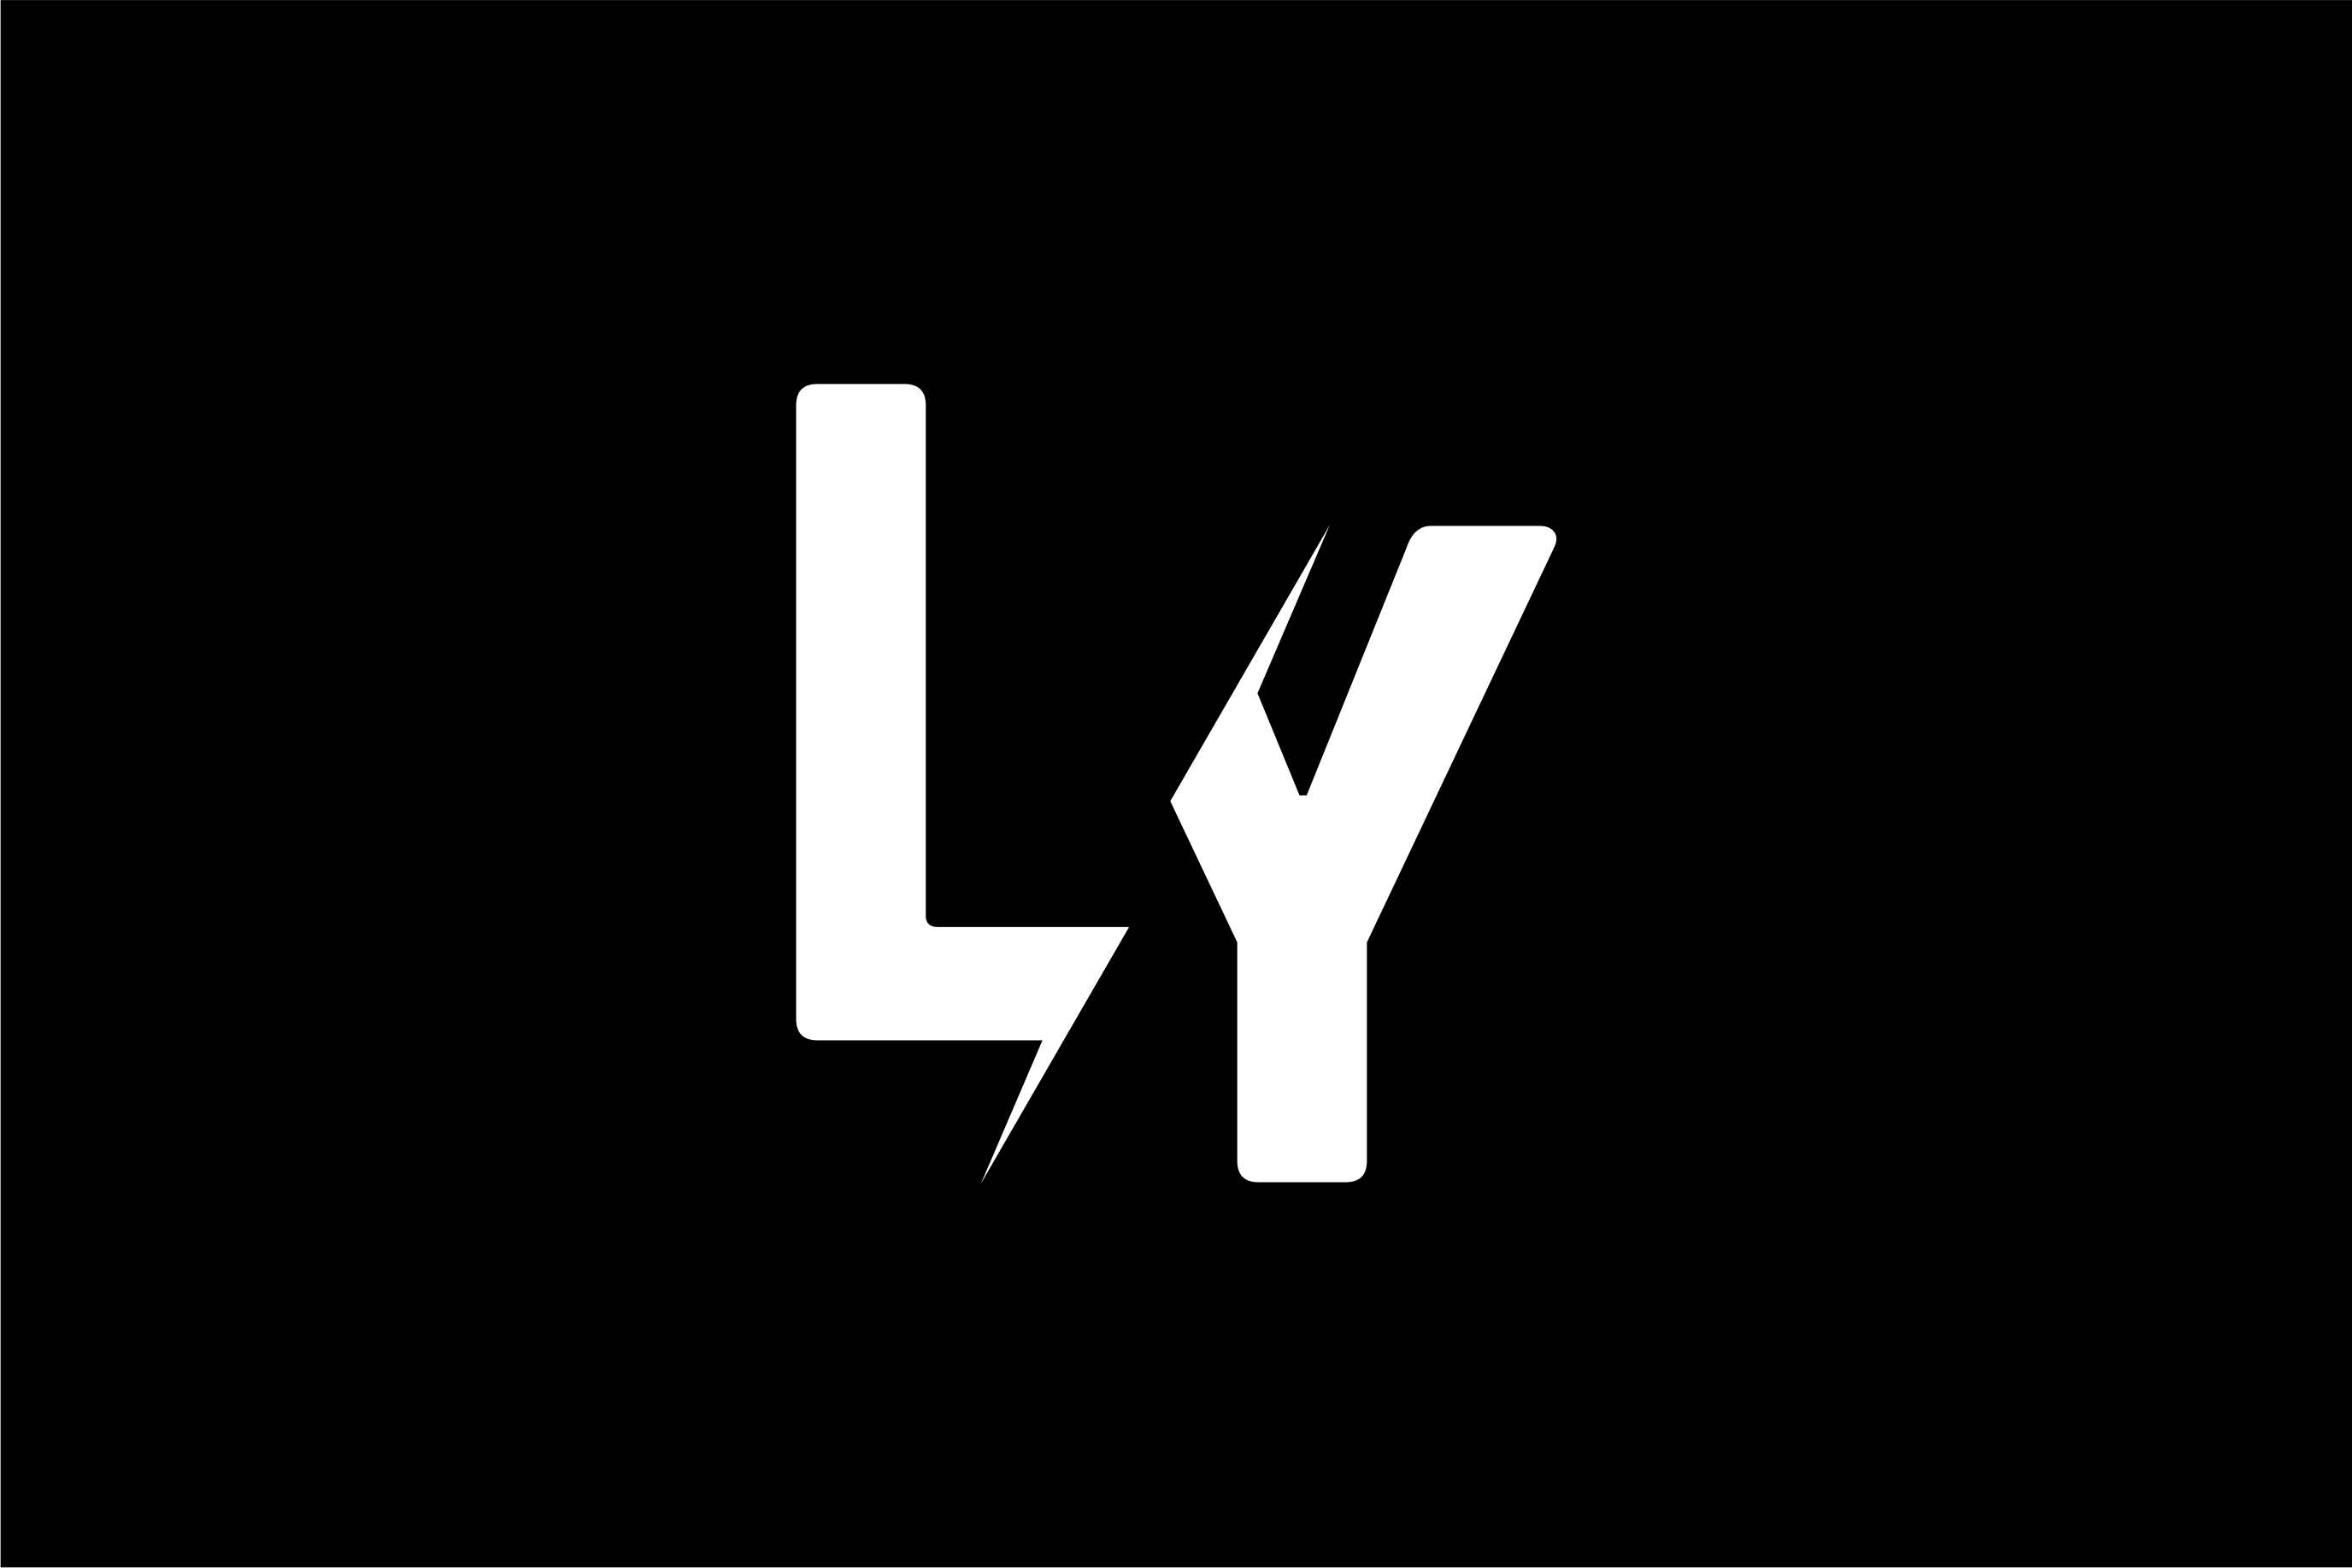 Monogram LY Logo V2 Graphic by Greenlines Studios · Creative Fabrica